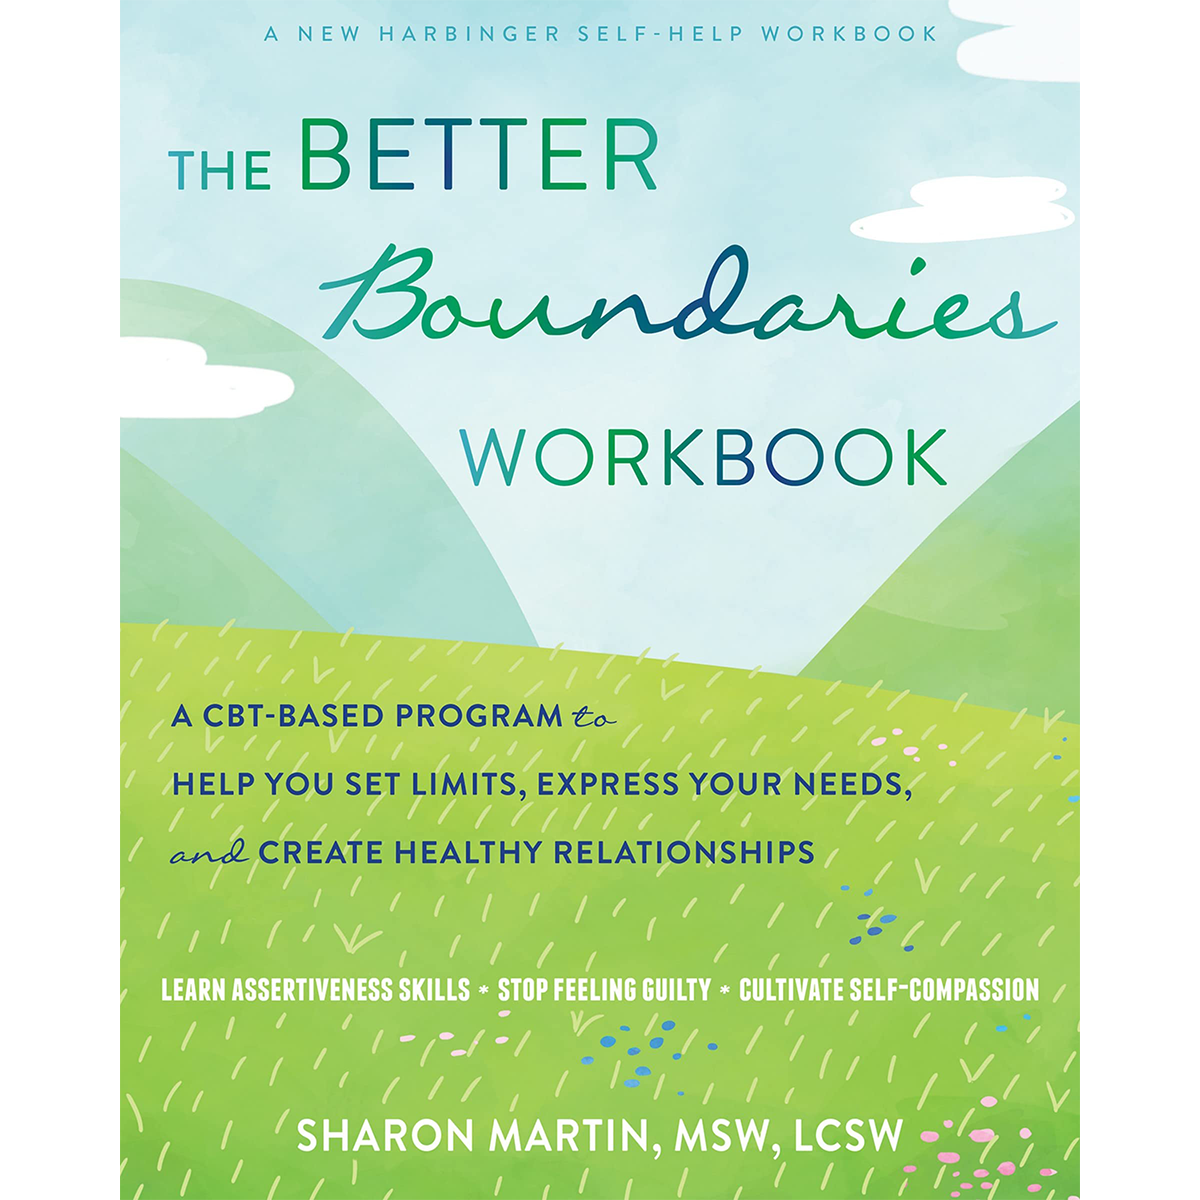 The Better Boundaries Workbook